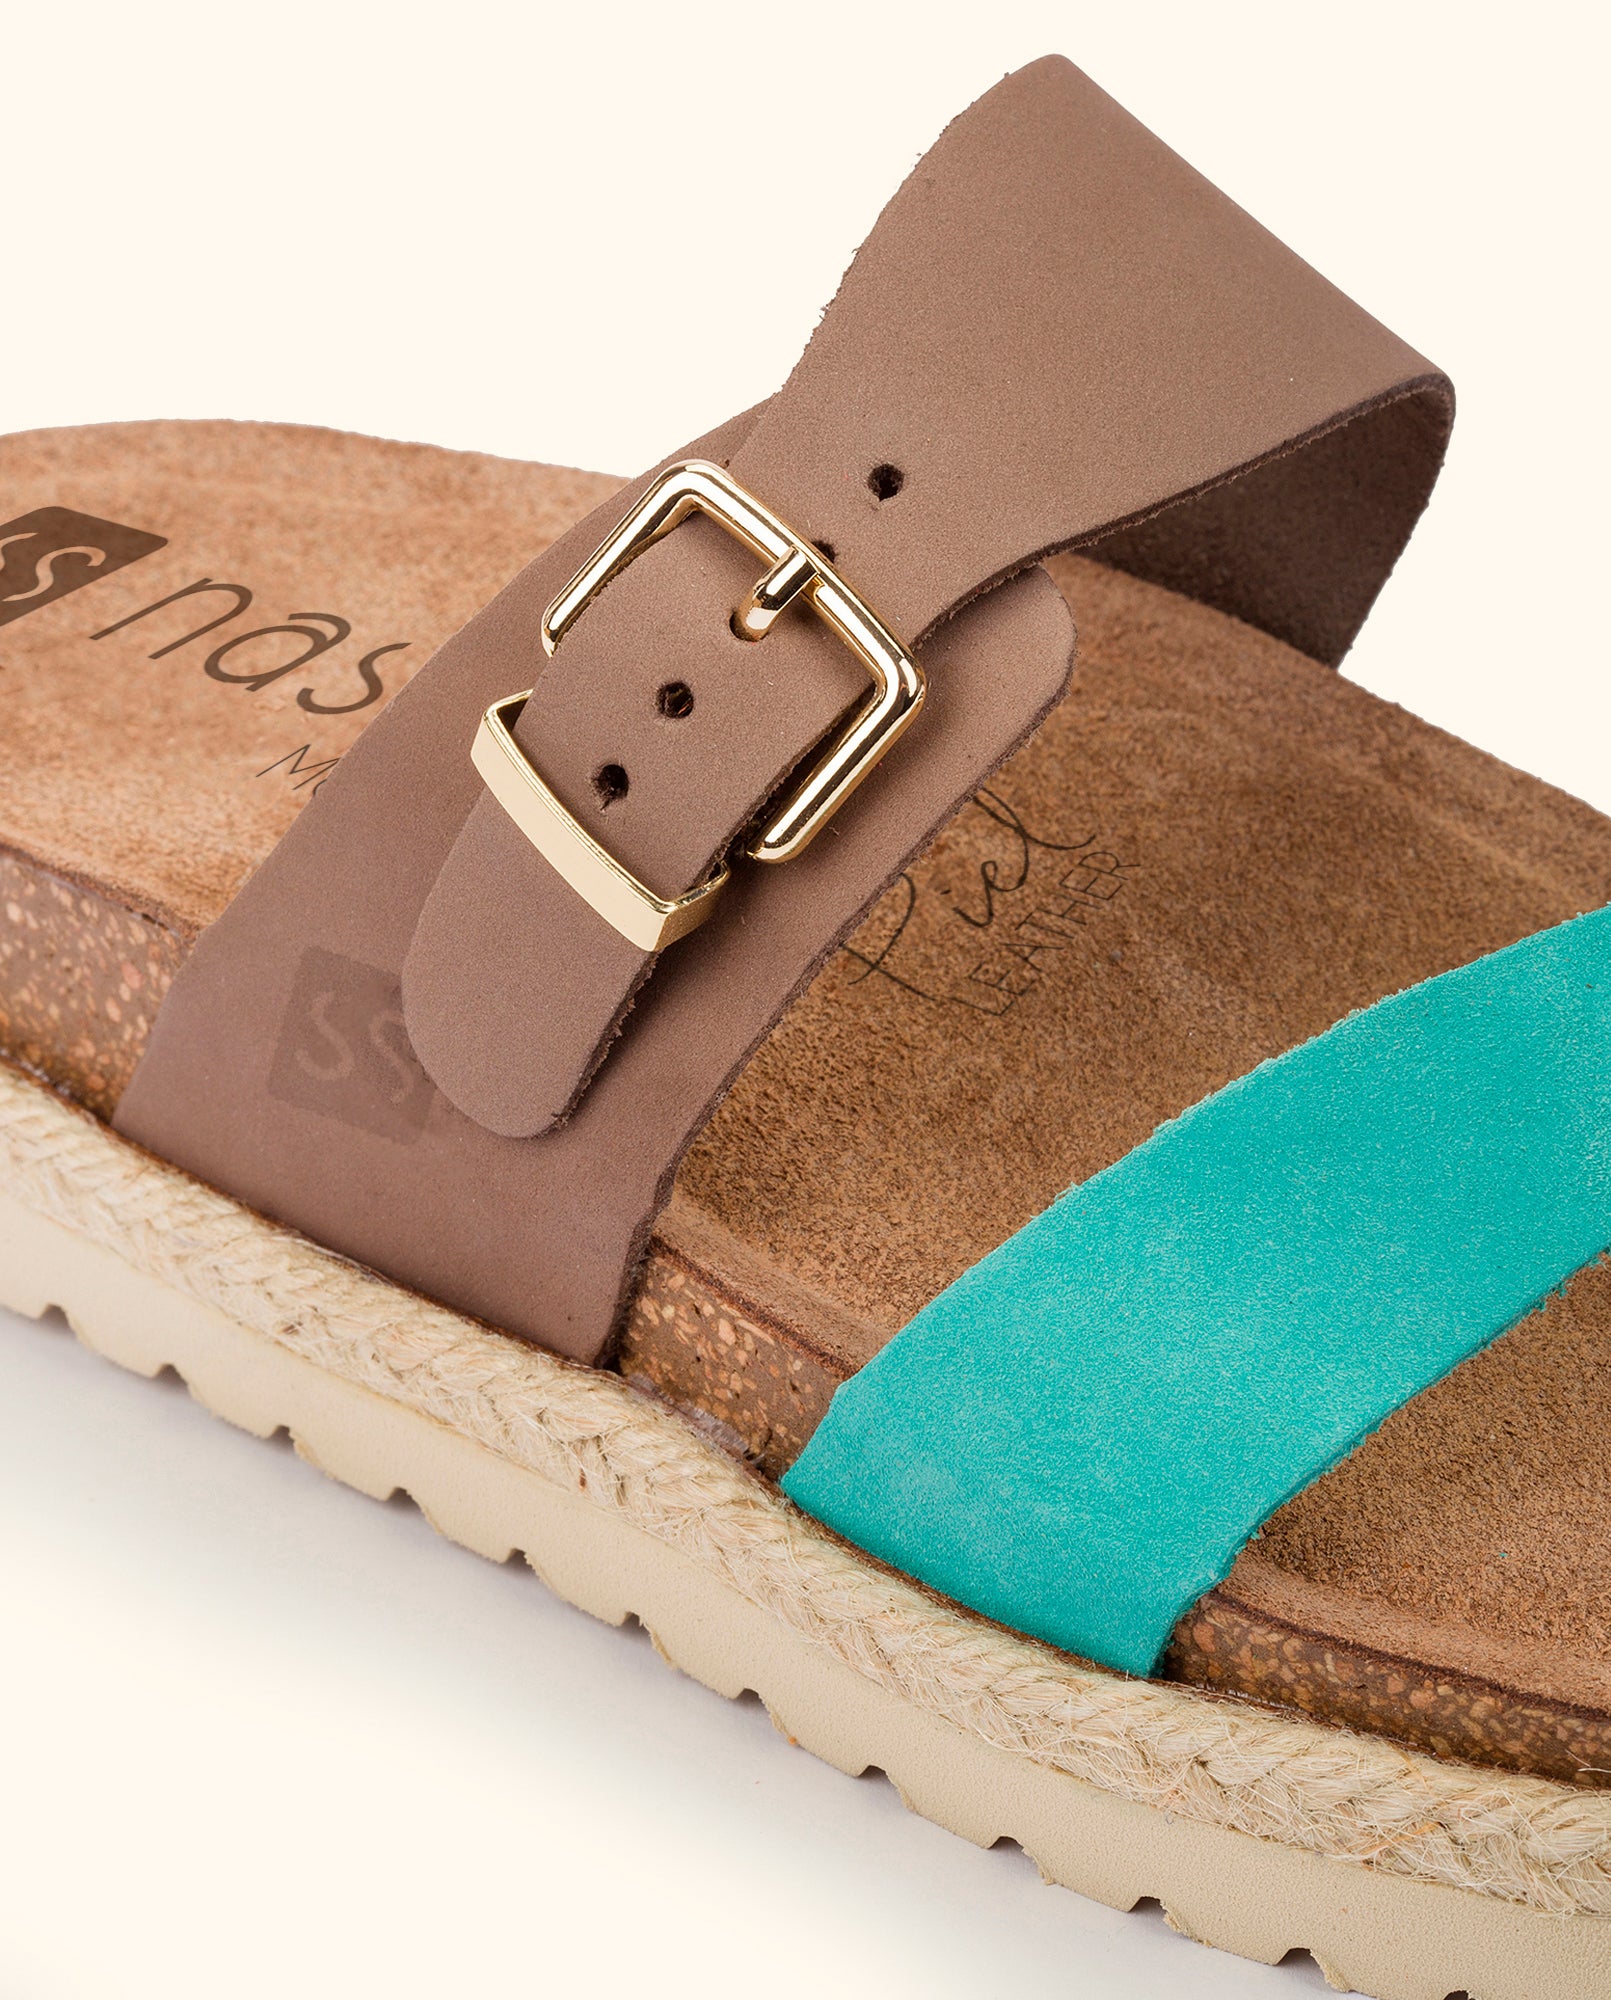 Flat sandal INCA-091 blue